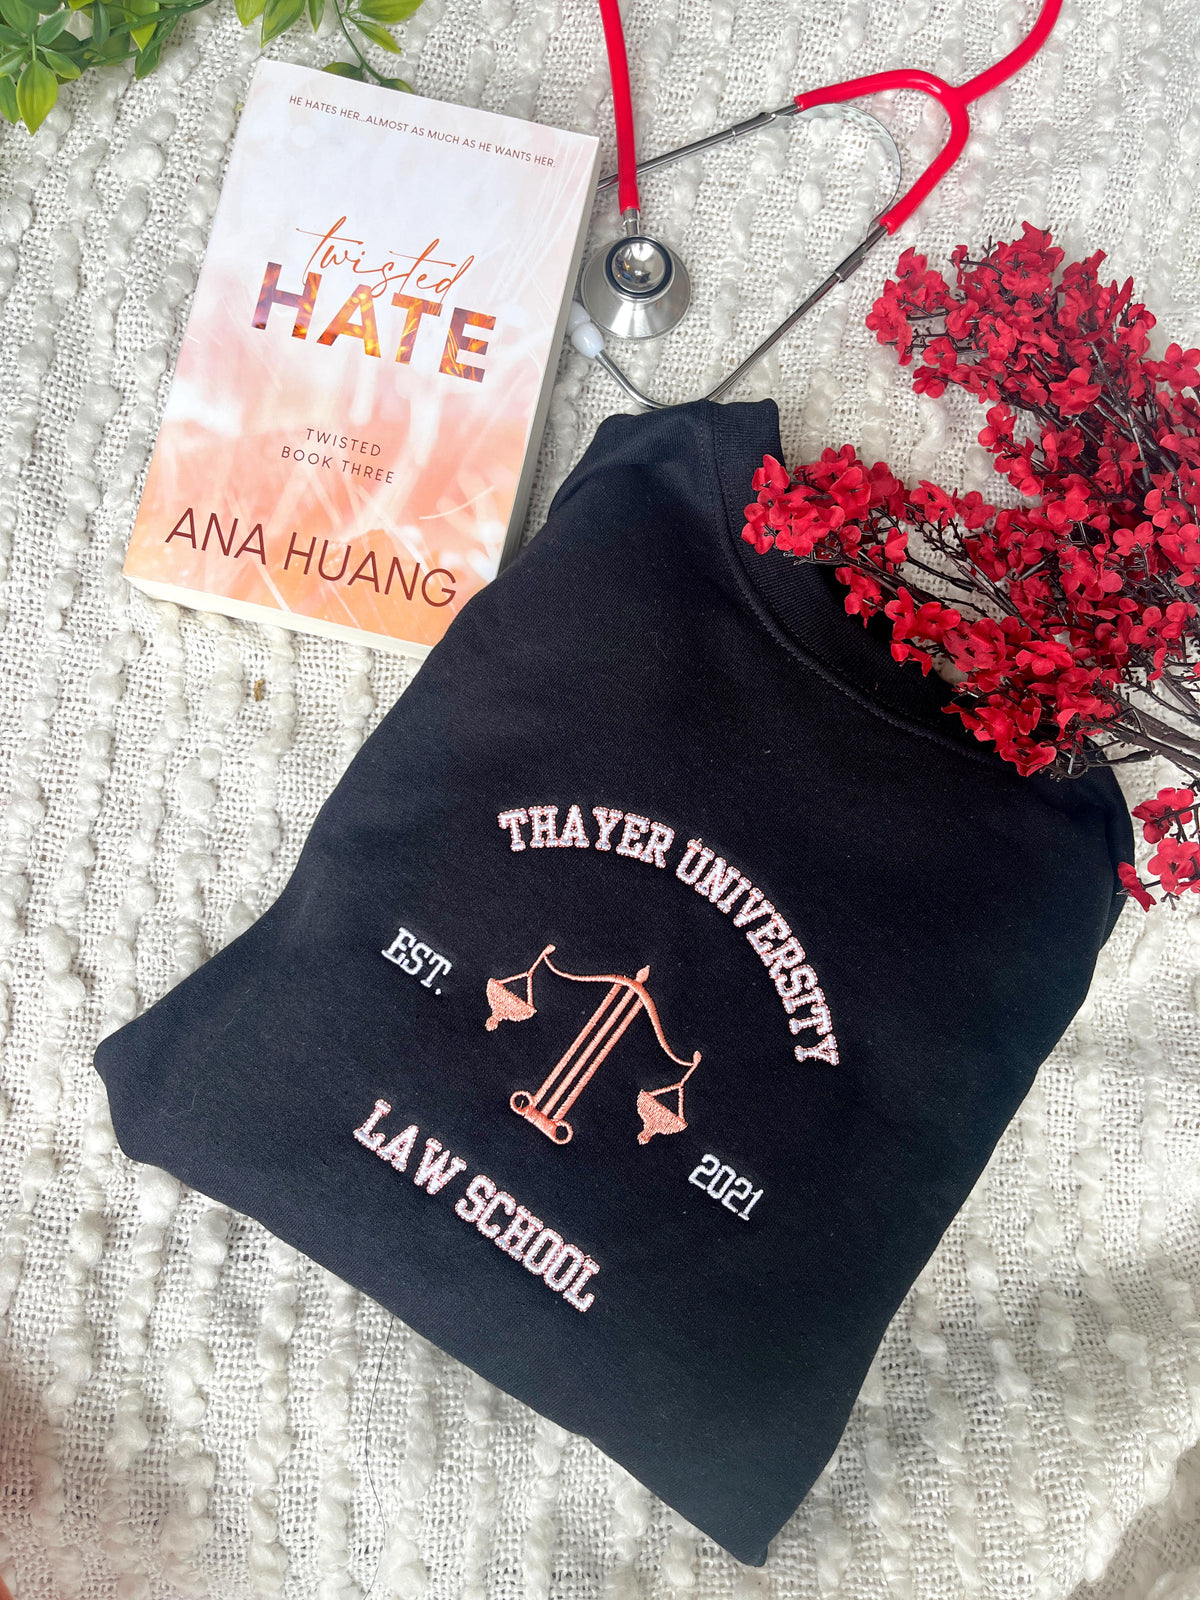 Thayer University- Twisted Hate Sweatshirt